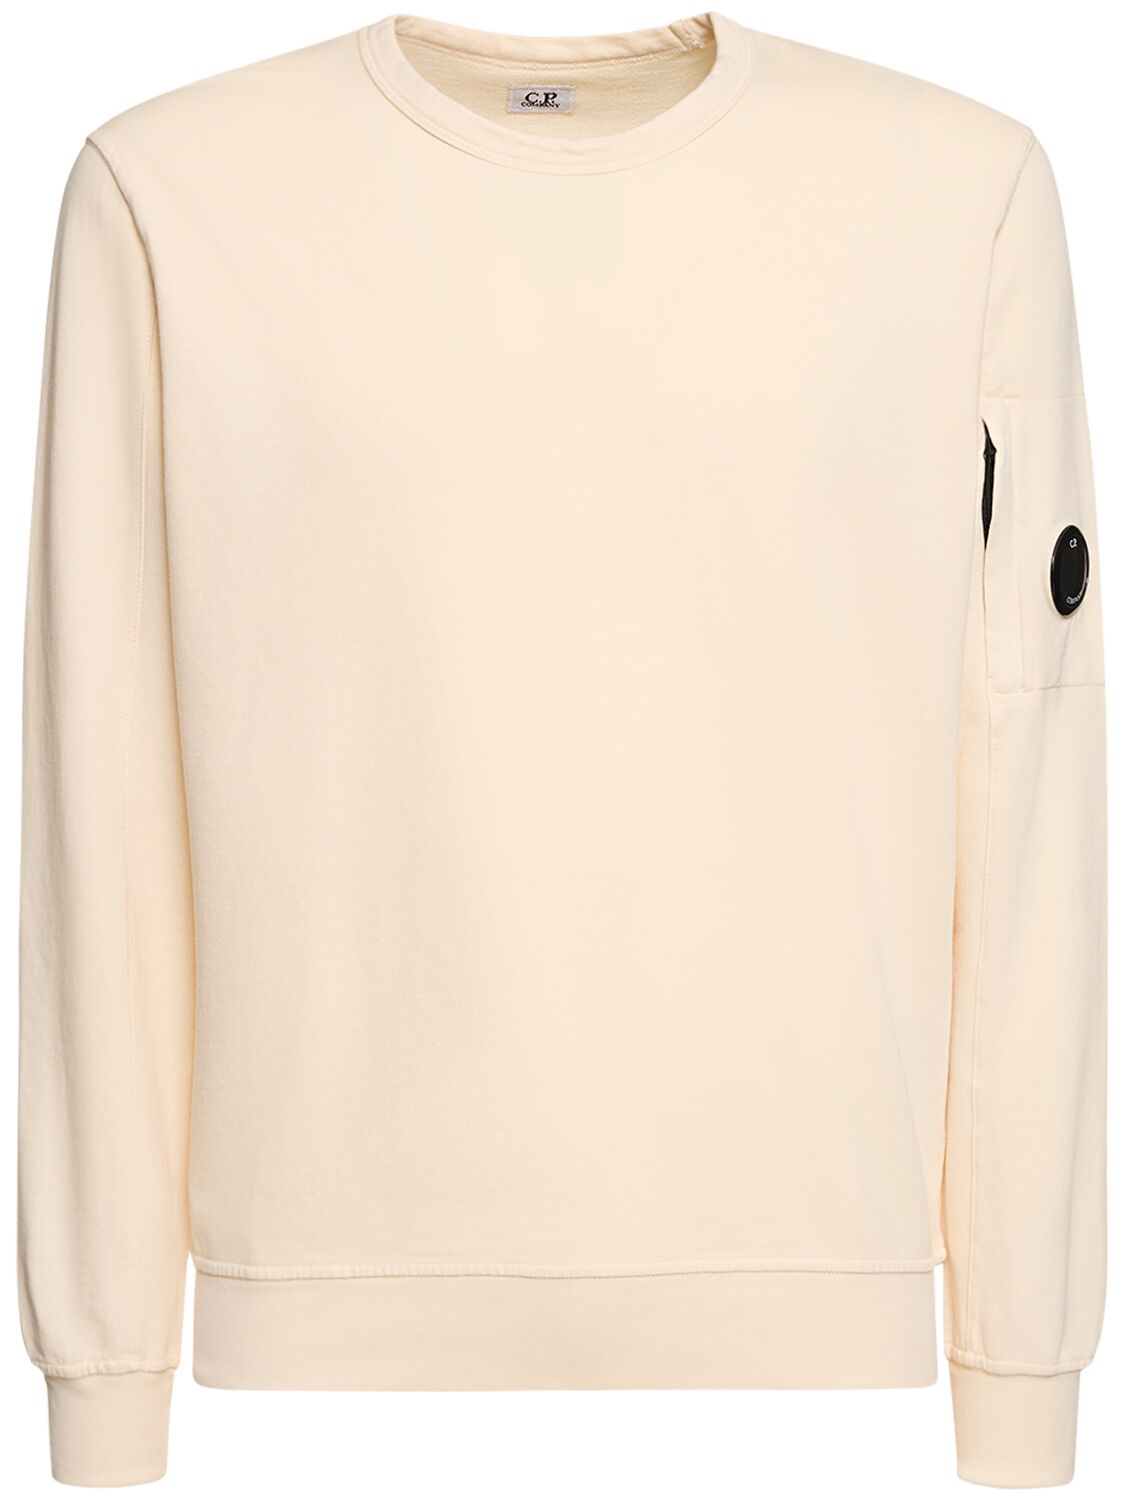 C.p. Company Light Fleece Sweatshirt In Pistachio Shell